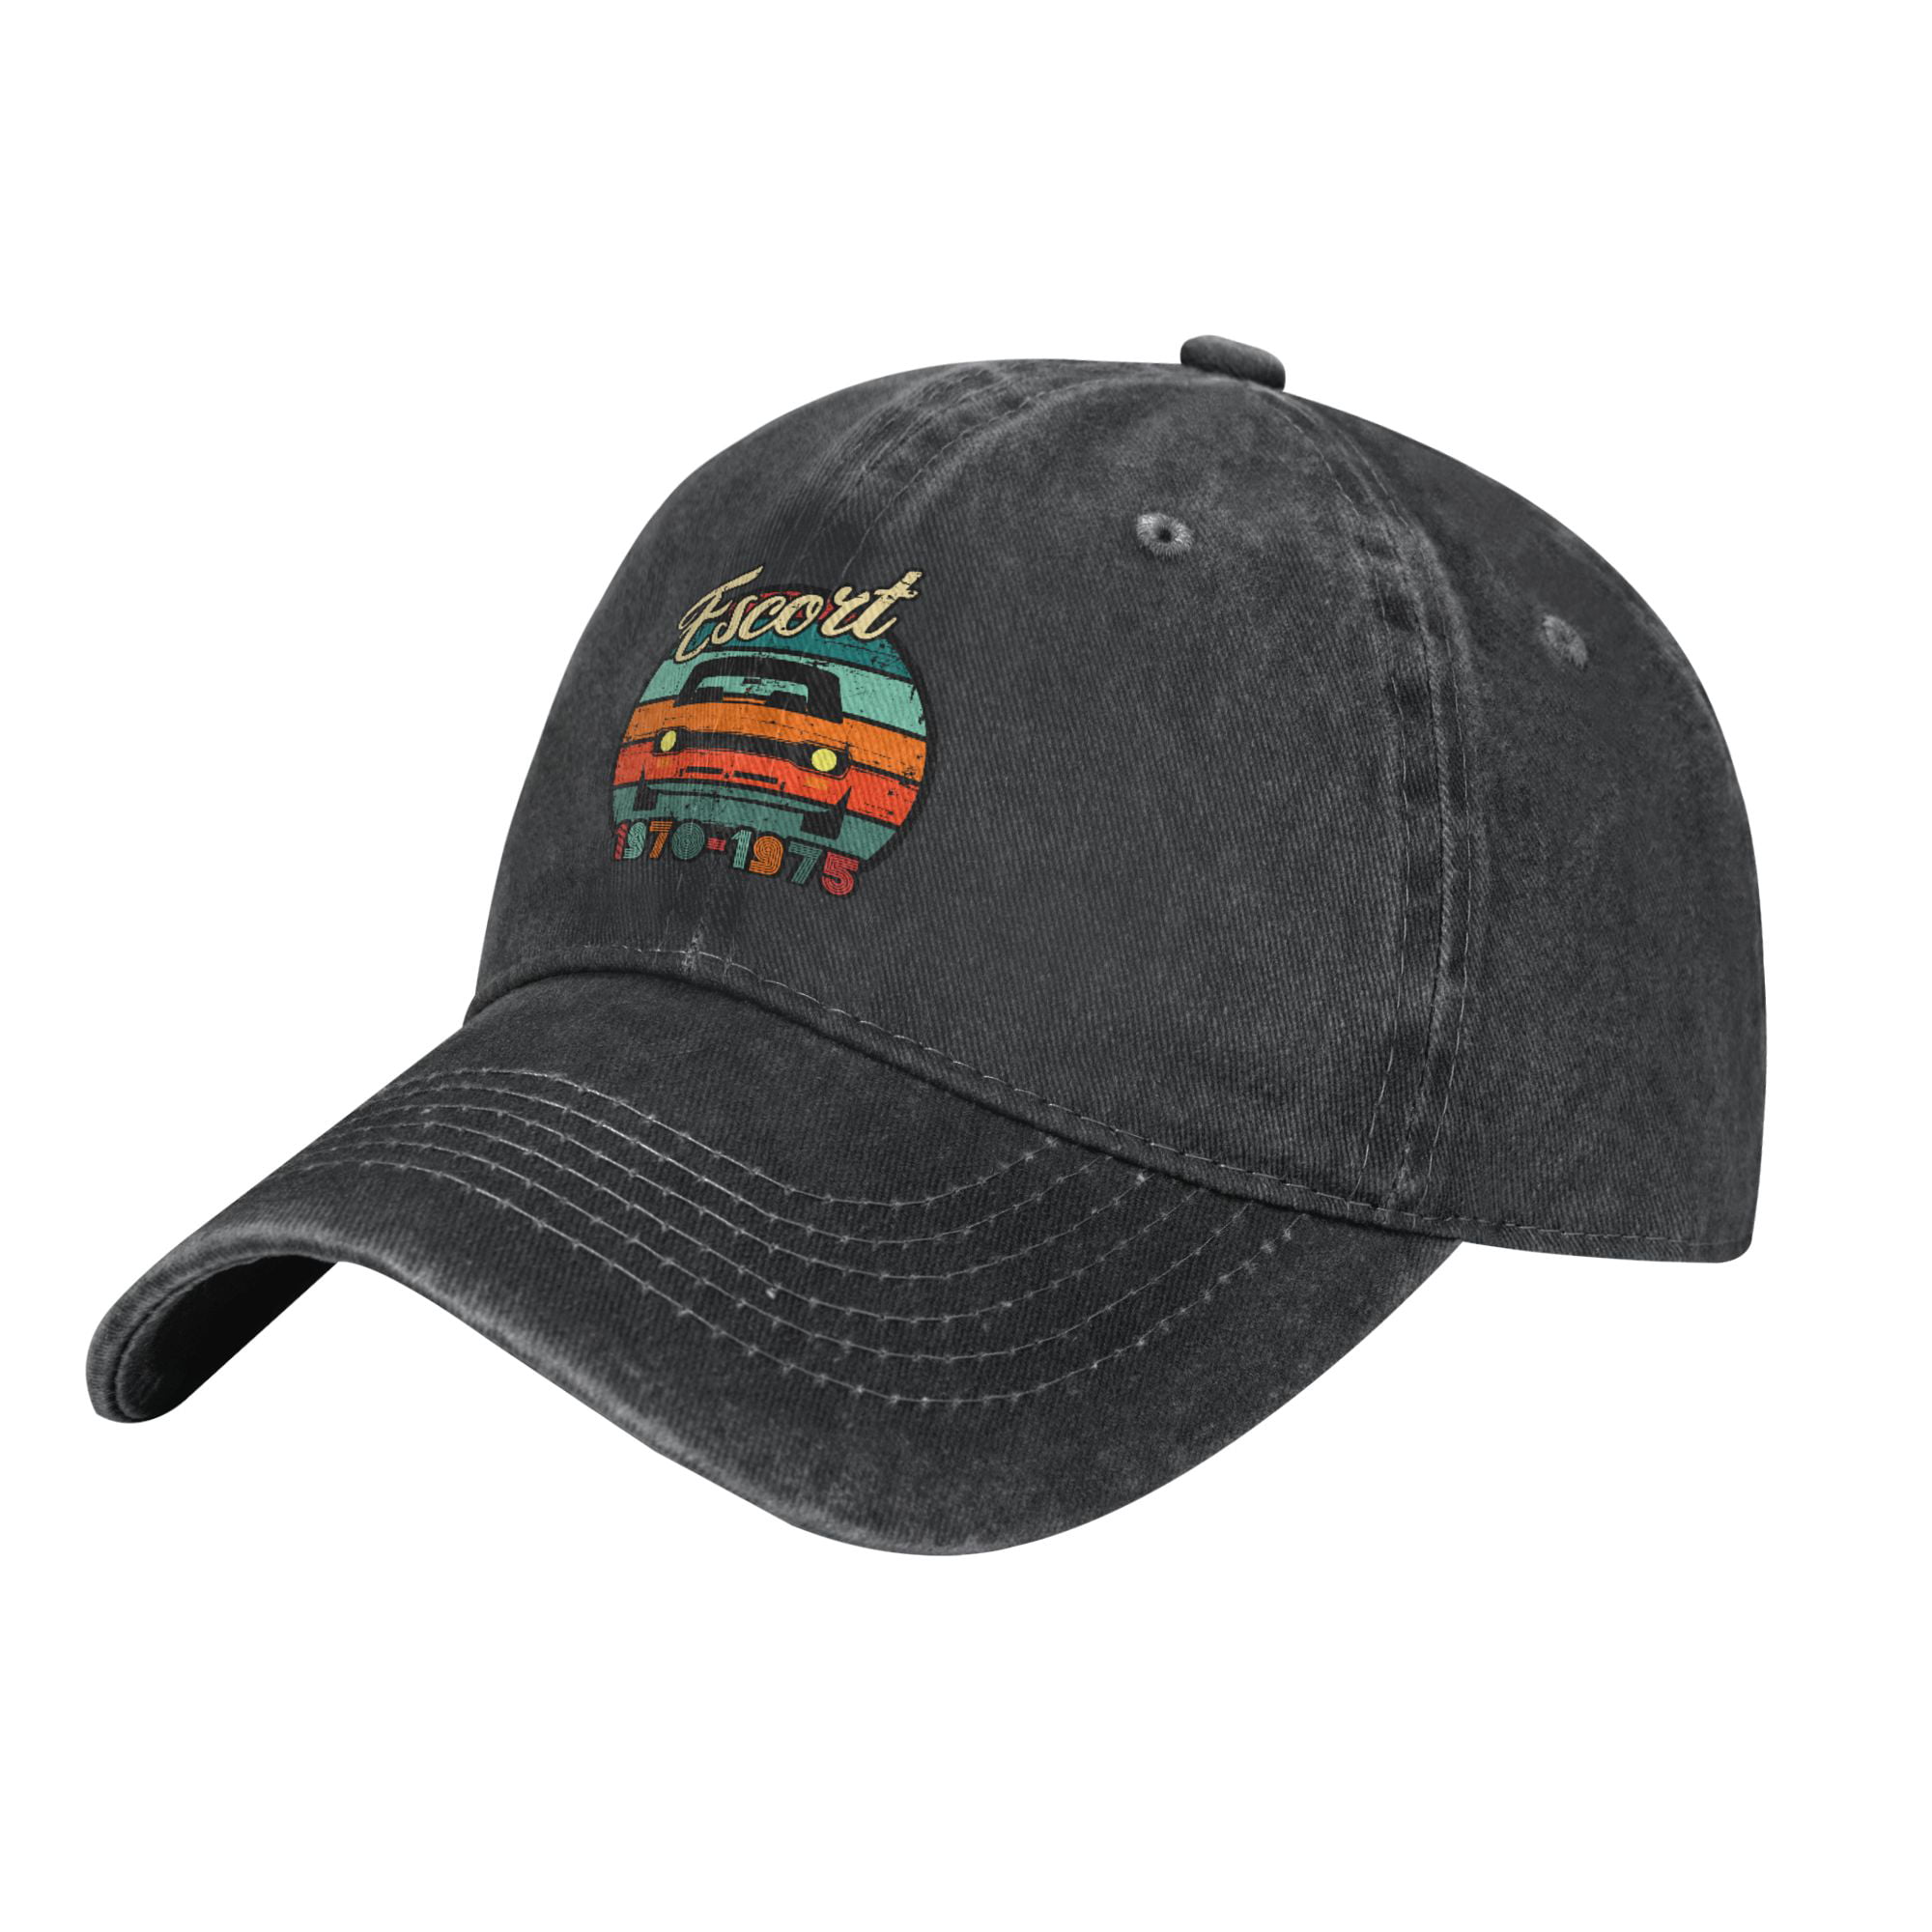 REDVIT-I-Love-Fishing-Trucker-Hat, Vintage Washed Cotton Baseball Cap Black  Dad Hat for Men Women : : Fashion